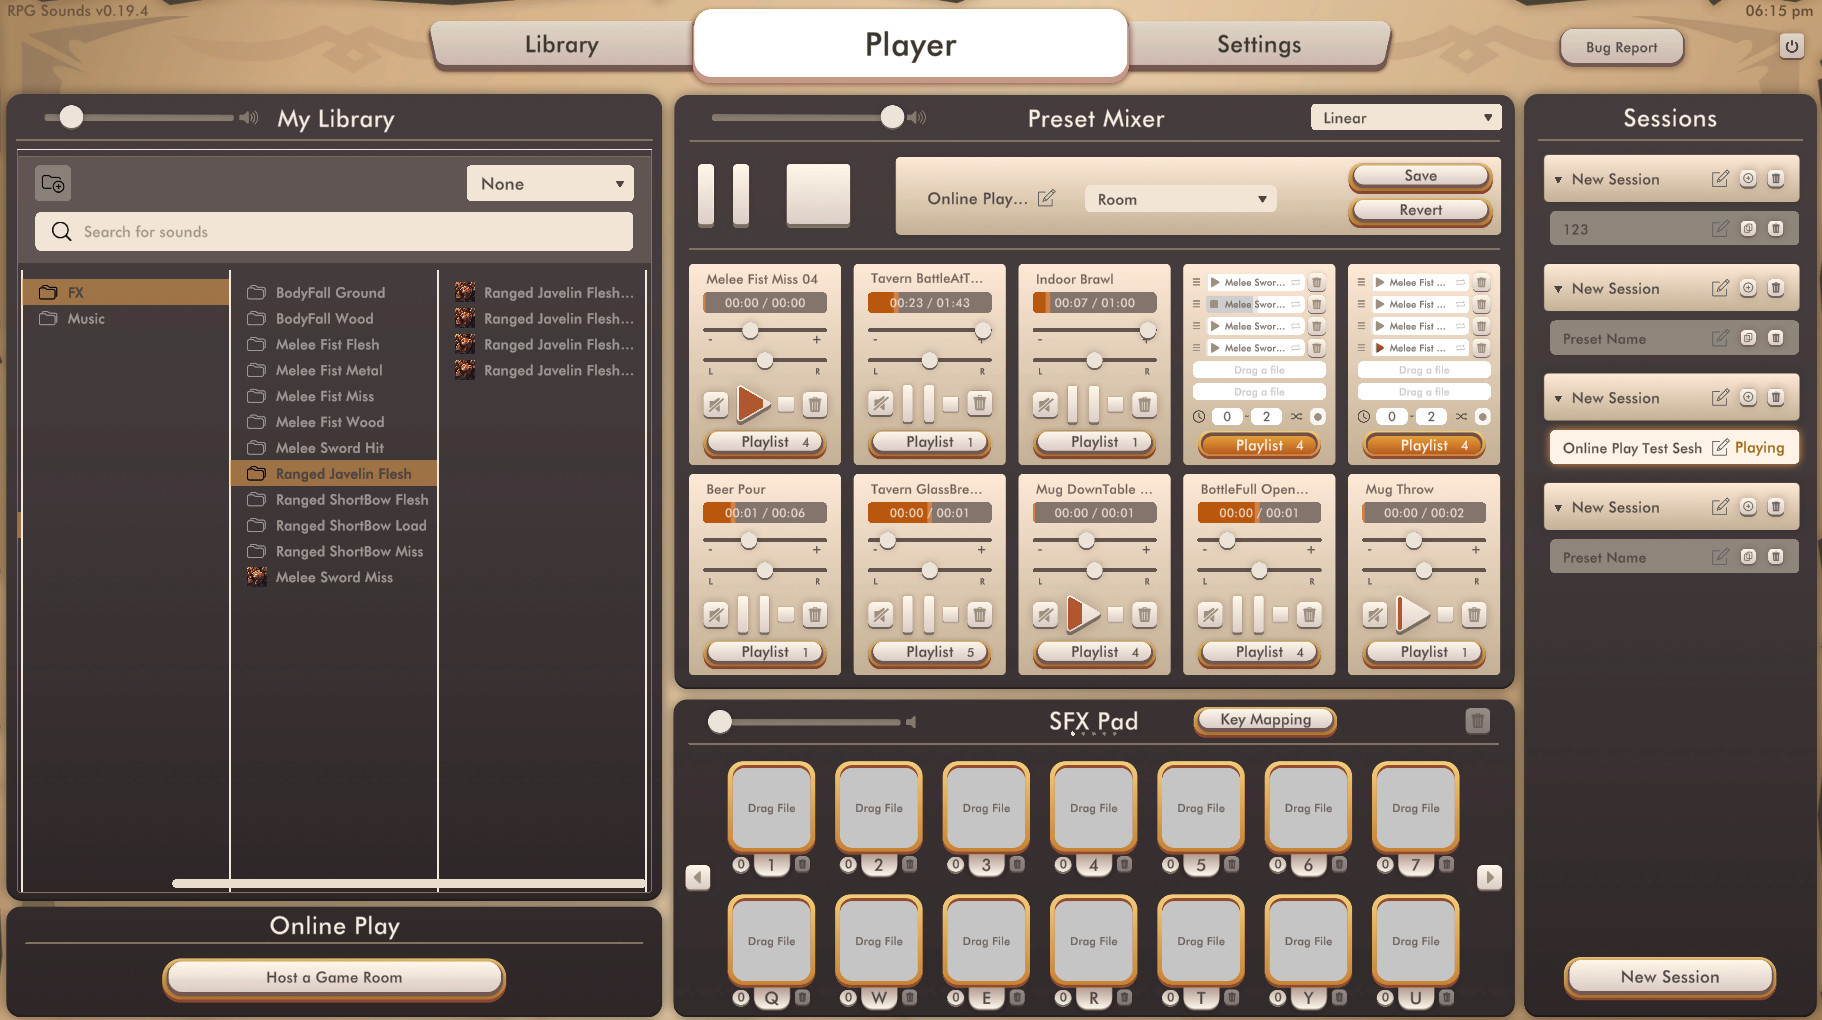 RPG Sounds - Temples Mega Bundle - Sound Pack - Michael Ghelfi Signature screenshot